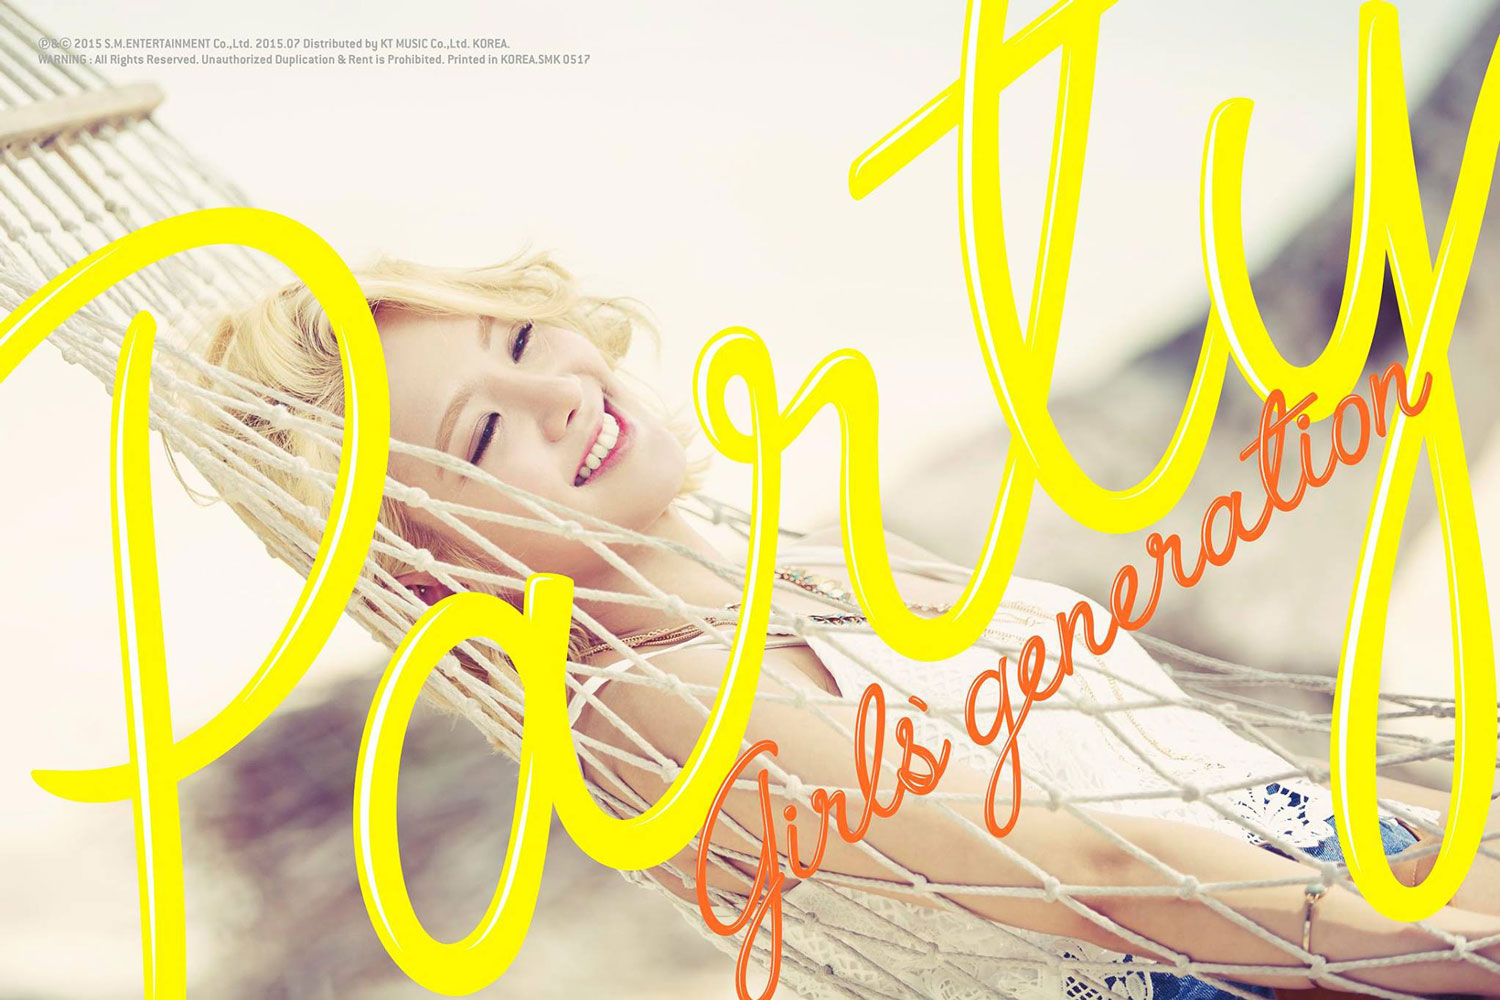 Girls Generation Hyoyeon Party concept photo